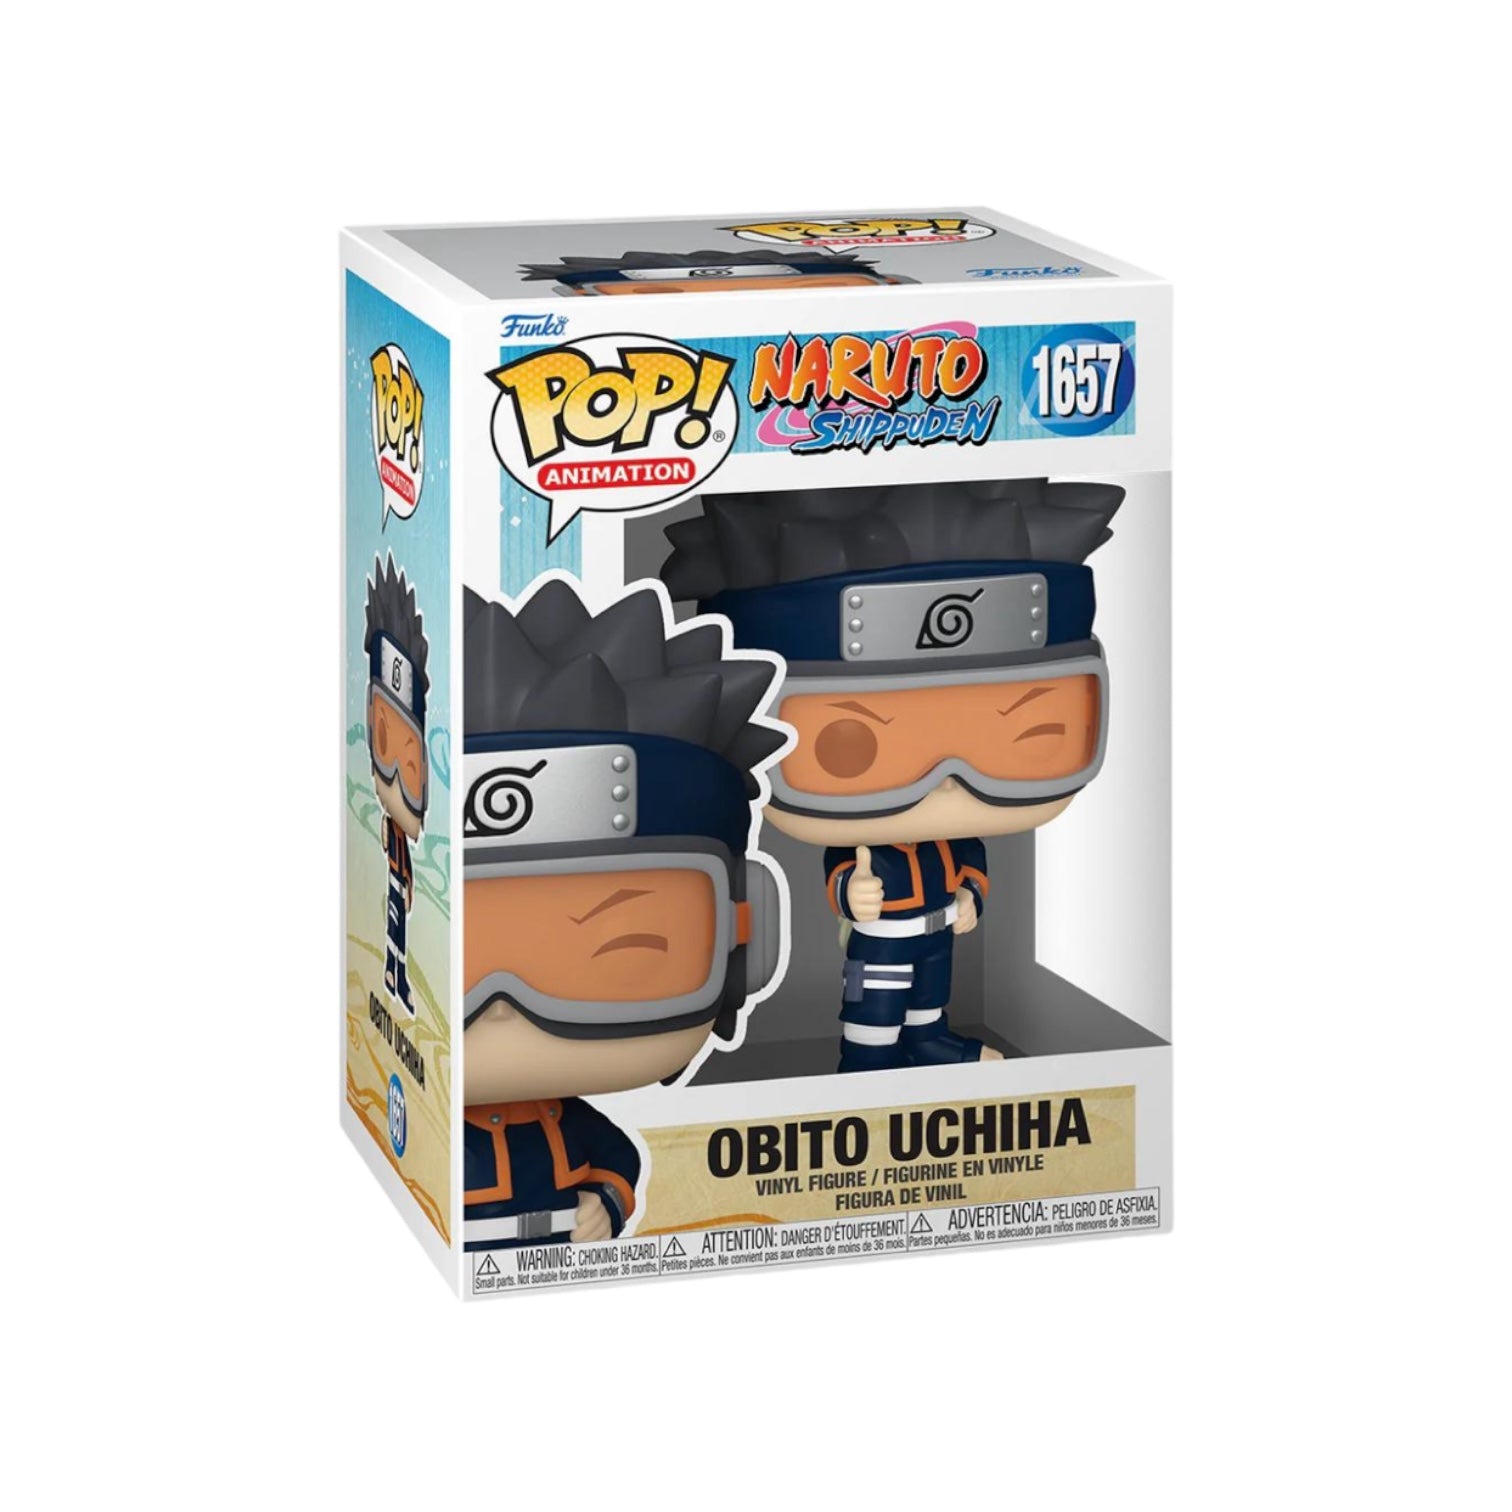 Obito Uchiha #1657 Funko Pop! - Naruto Shippuden - PREORDER